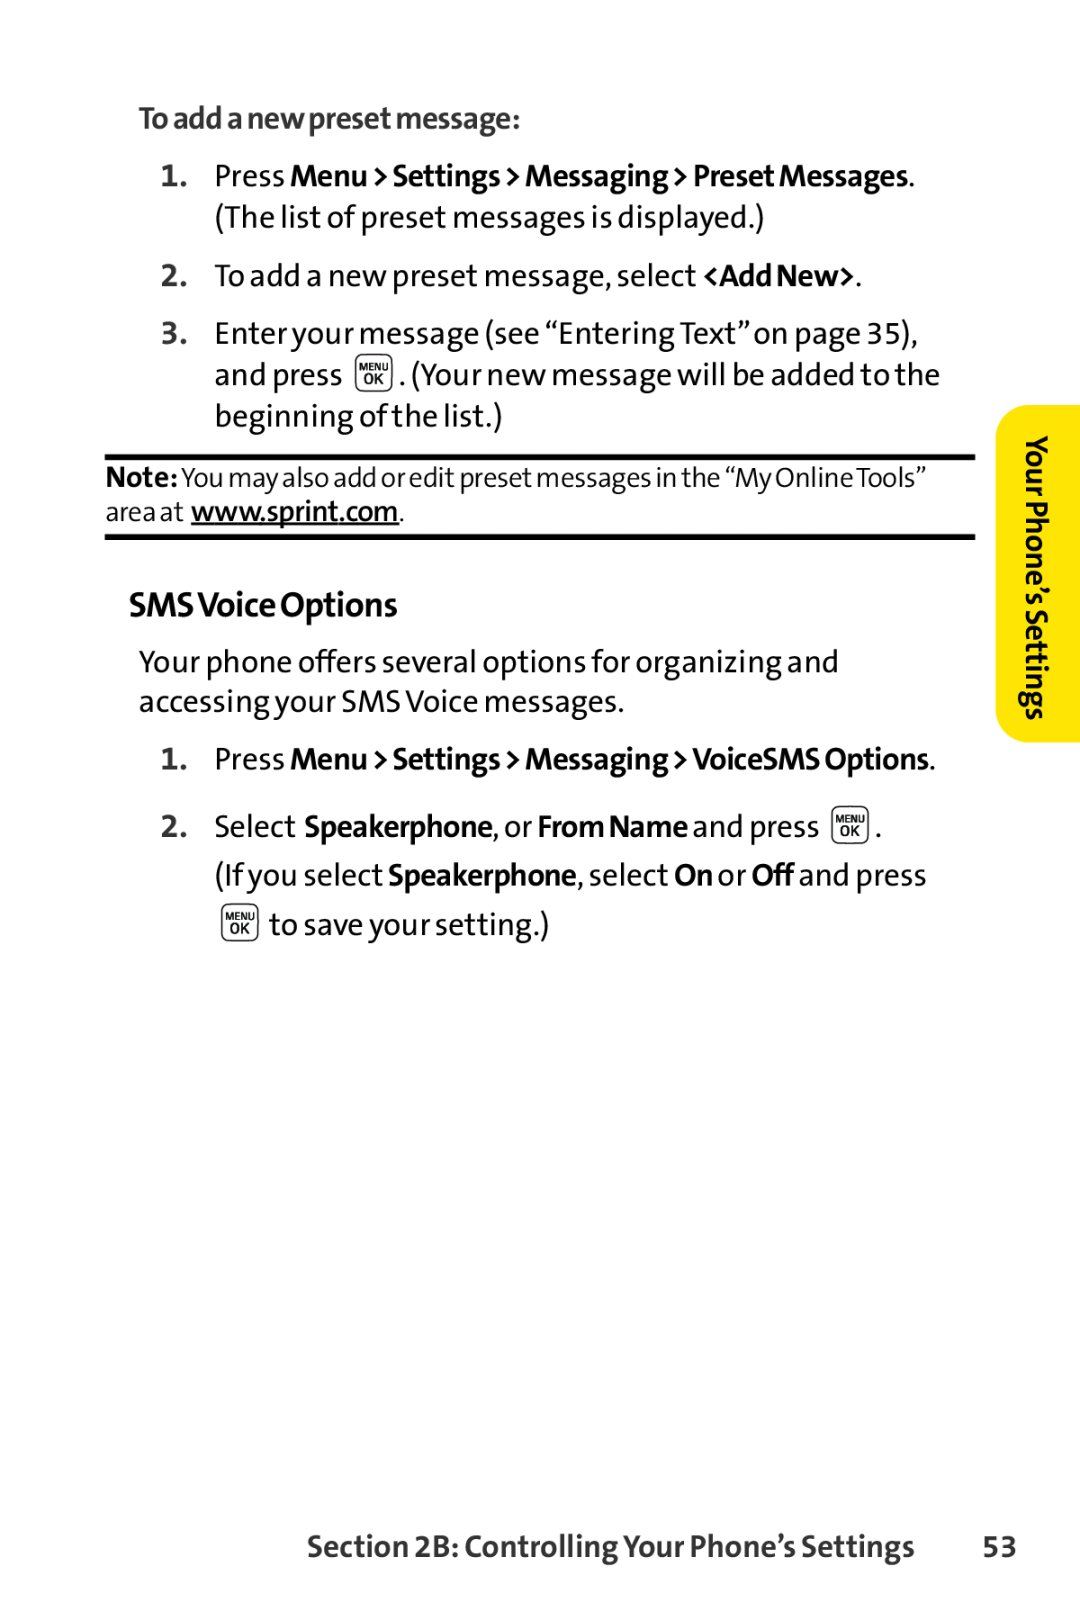 Sprint Nextel LX160 manual SMSVoiceOptions, Toaddanewpresetmessage, Press MenuSettingsMessagingVoiceSMSOptions 